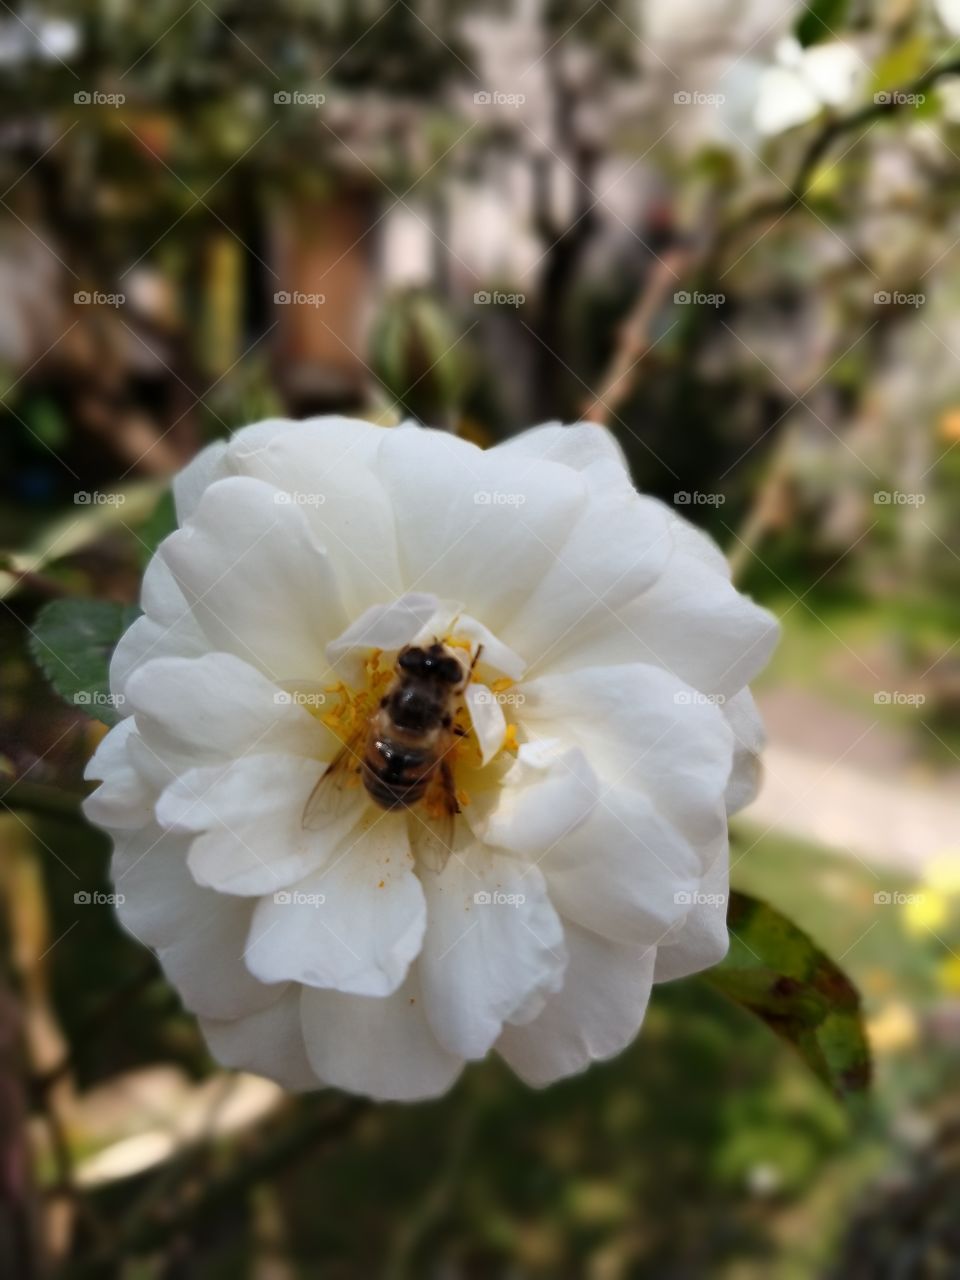 bee
flower
abeja
rosa
rosa blanca
rose